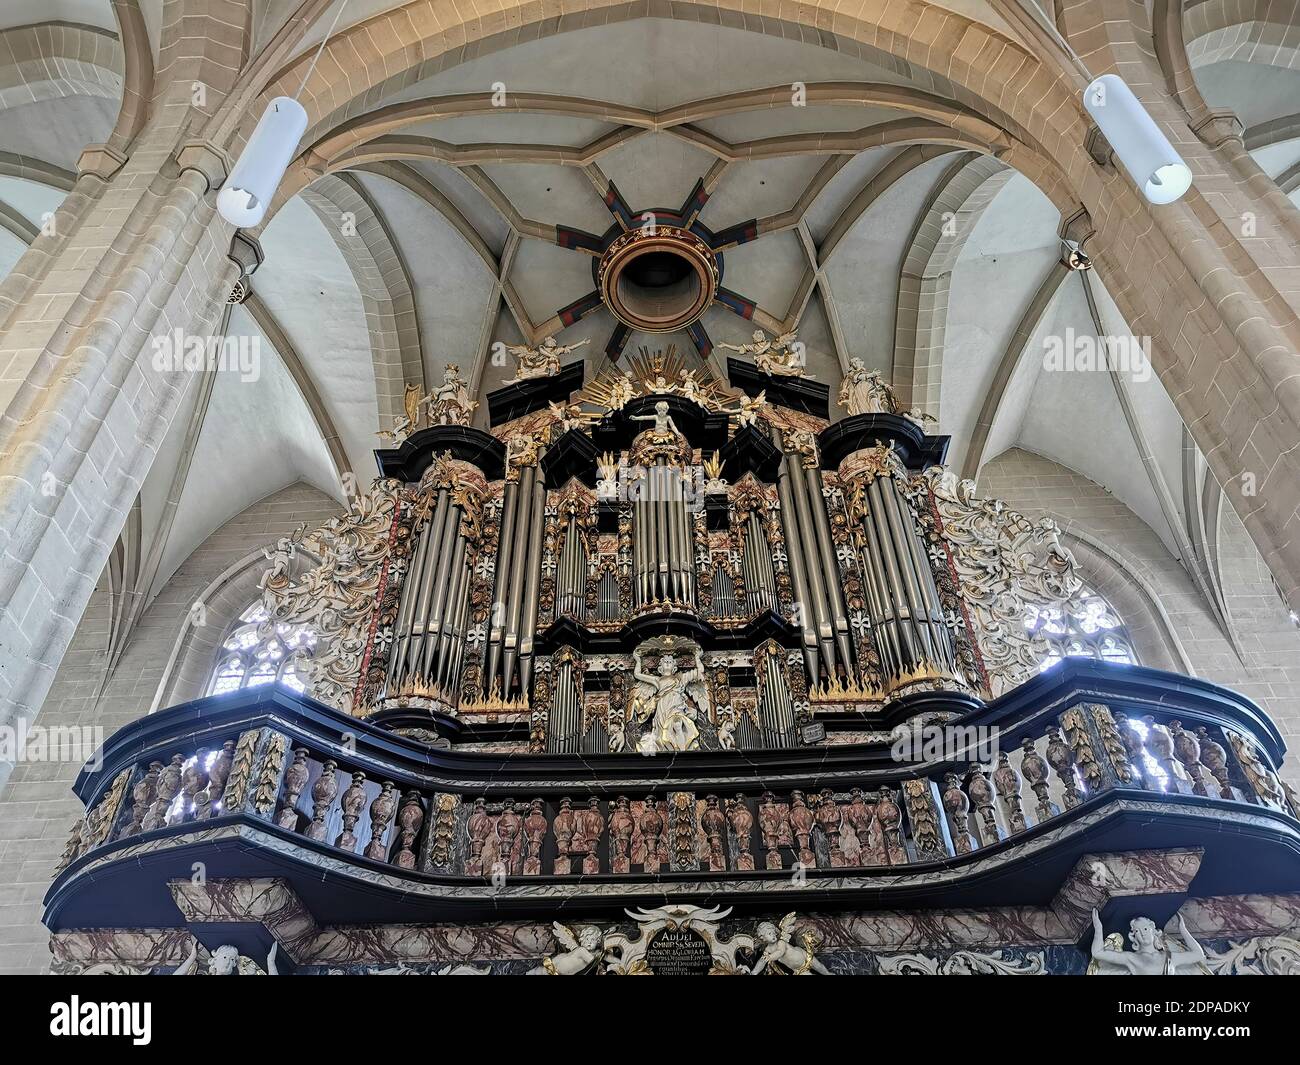 Klais organ in case by Wender, Severikirche am Domberg, Erfurt, Thuringia, Germany  /  Klais-Orgel im Gehäuse von Wender, Severikirche am Domberg, Erf Stock Photo